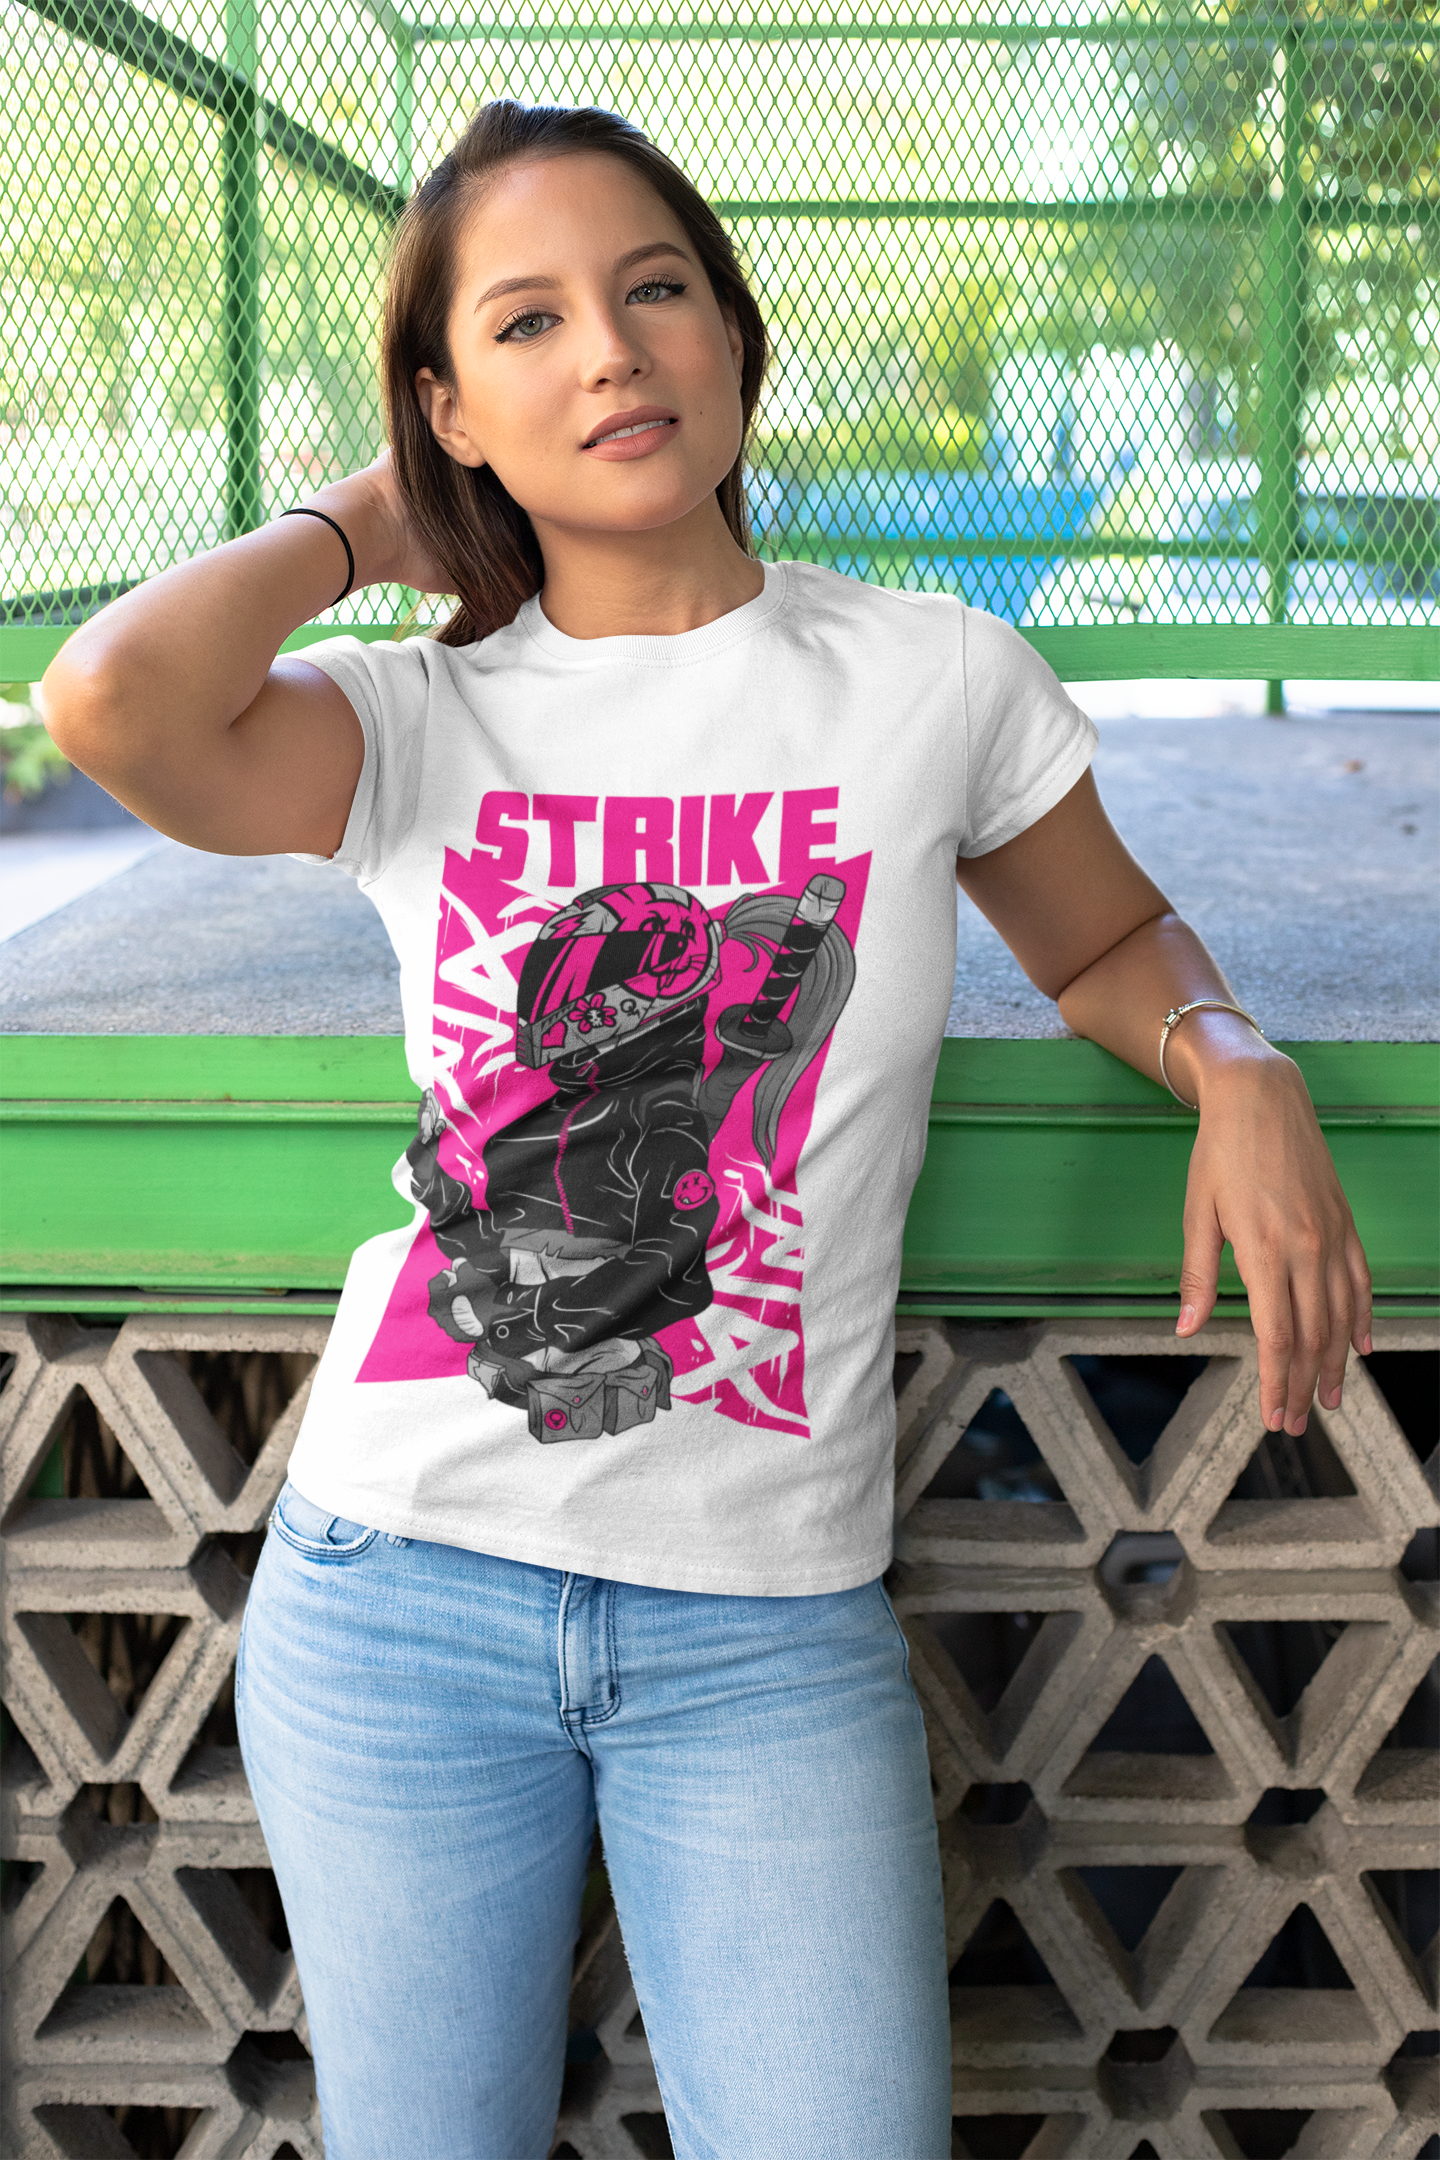 STRIKE T-Shirt for Women (Hot Pink Graphic) | BIKERSTORE.IN - bikerstore.in